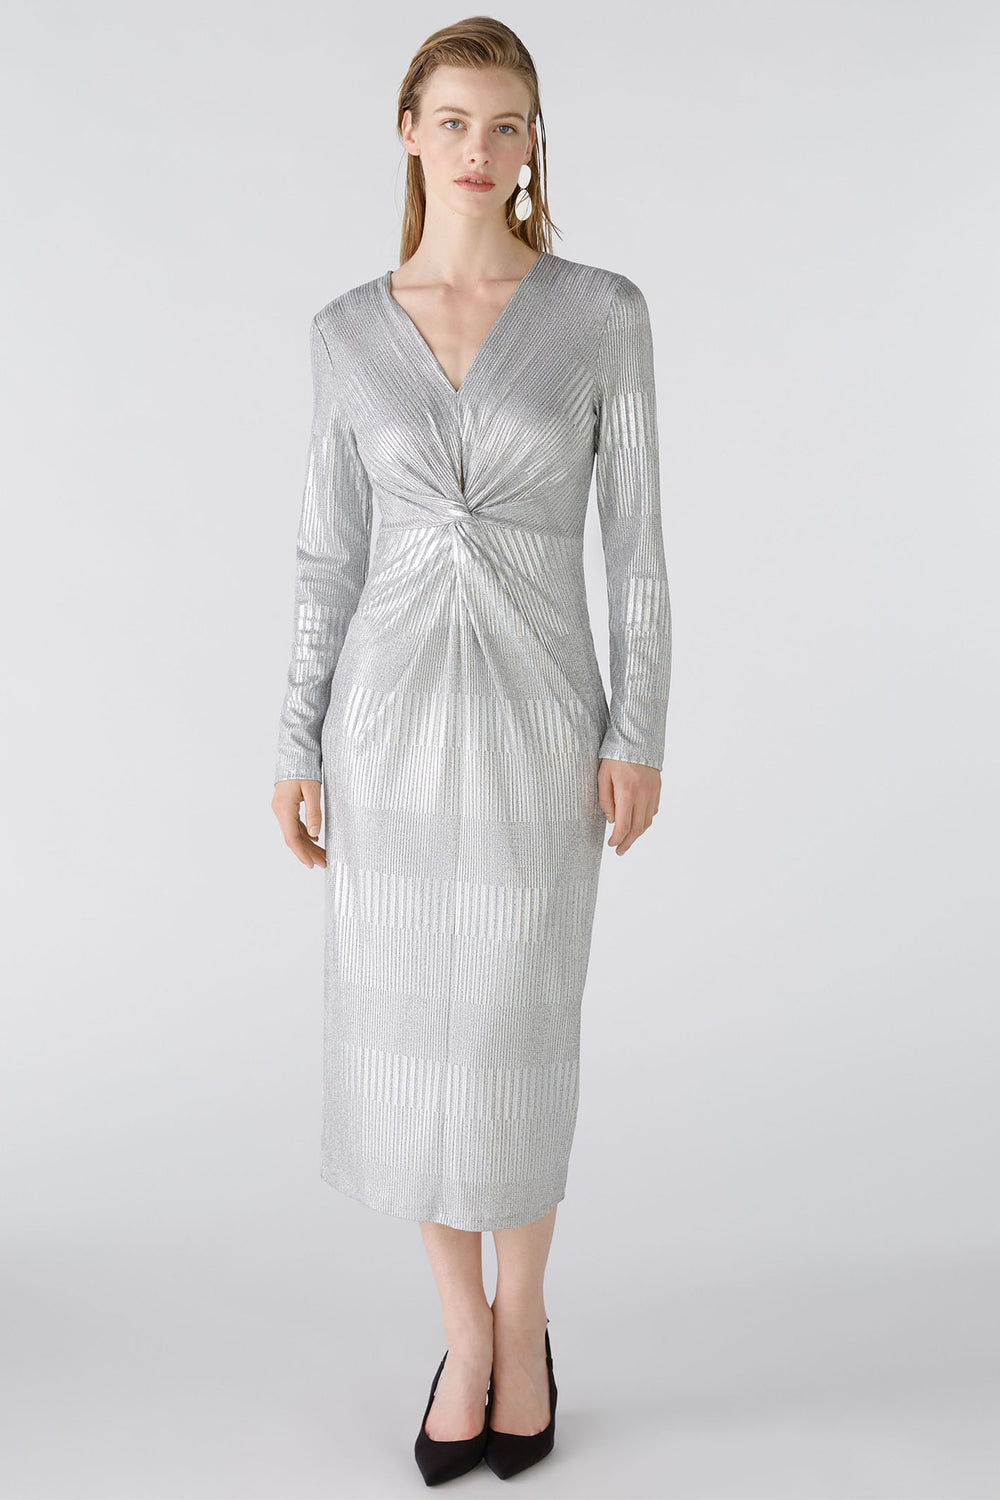 Oui Dress Silver Gunmetal Shimmer Long Sleeve Knot Front 89030-9674 - Olivia Grace Fashion